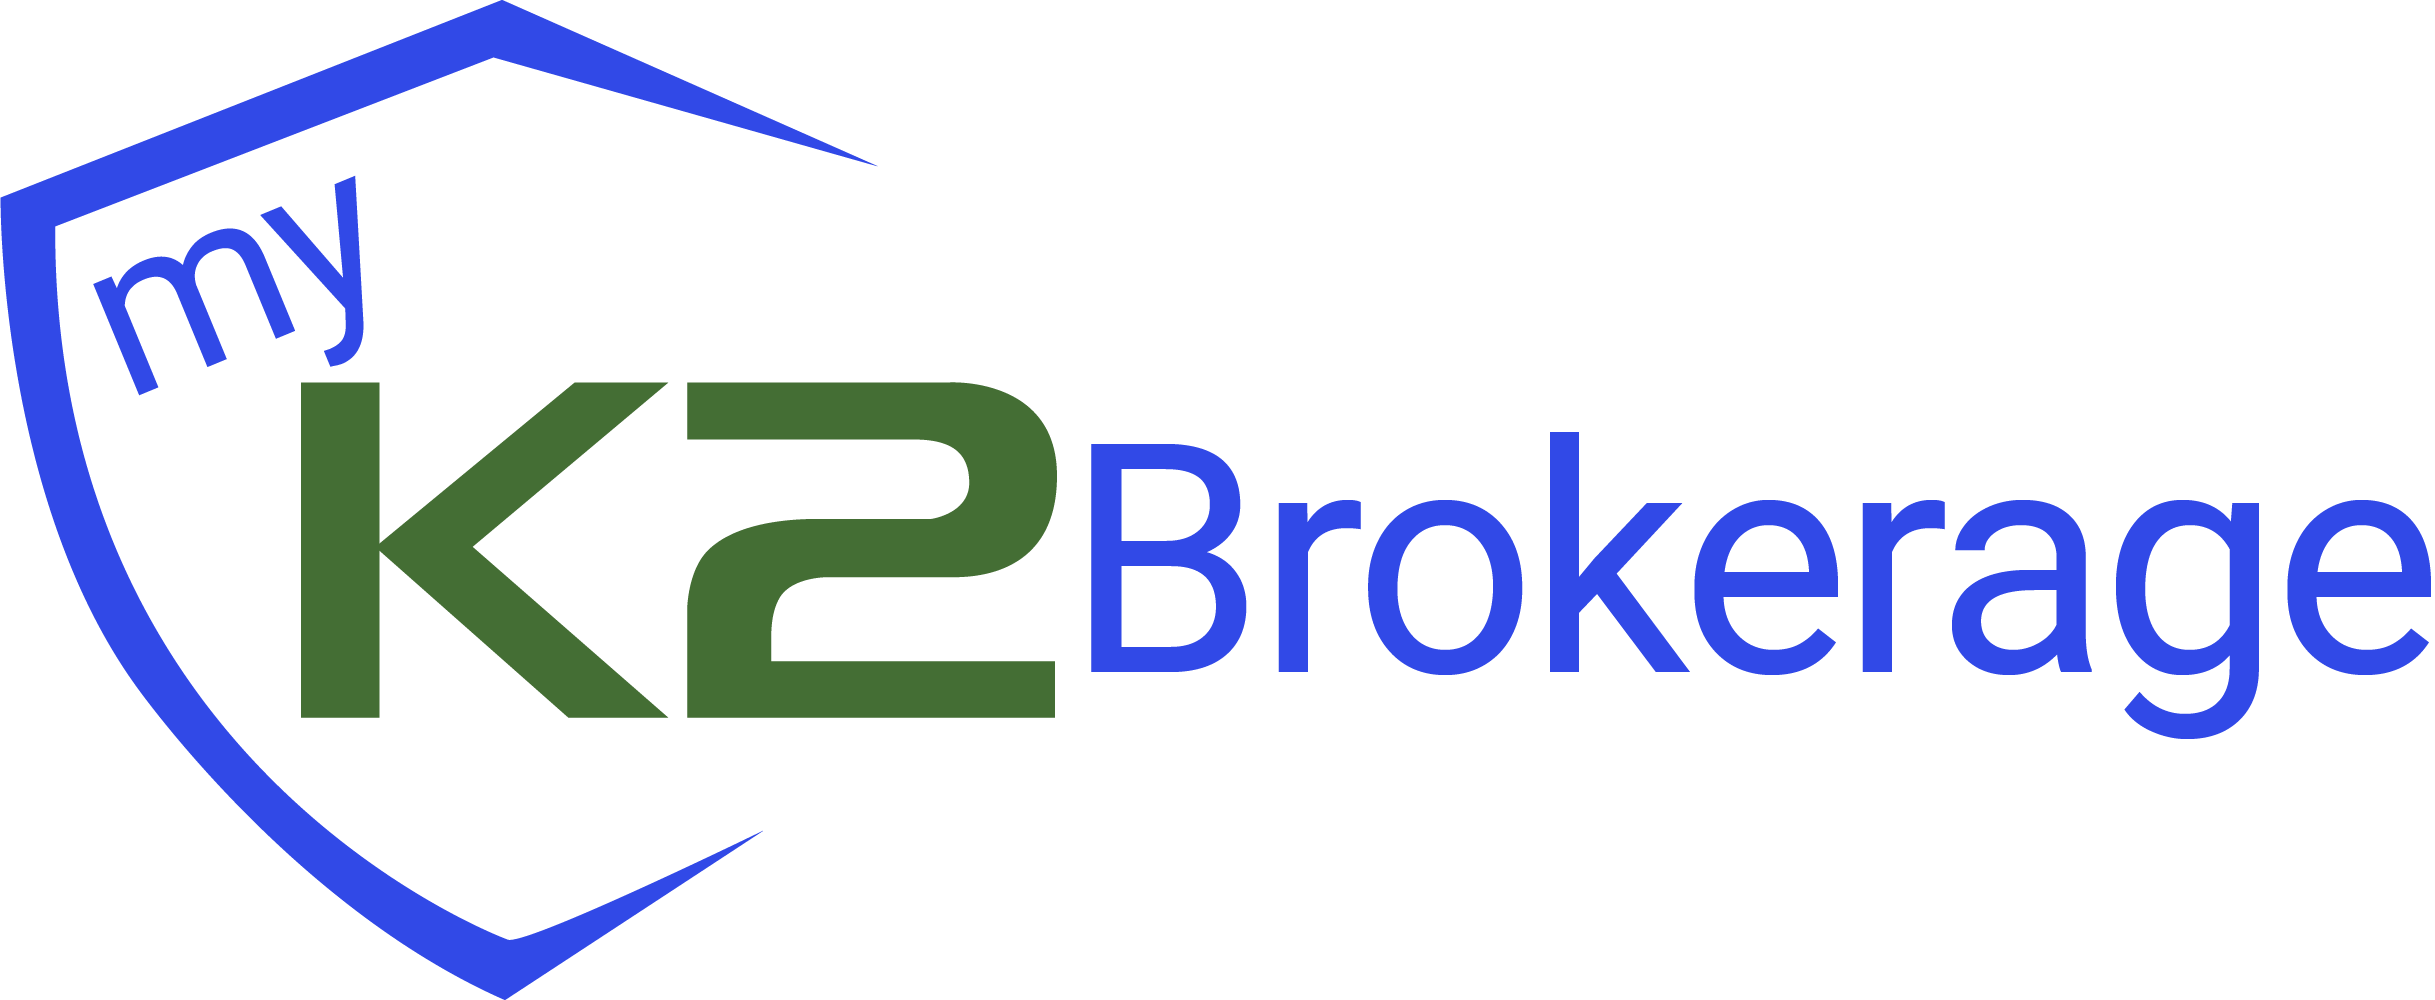 myk2brokerage Logo